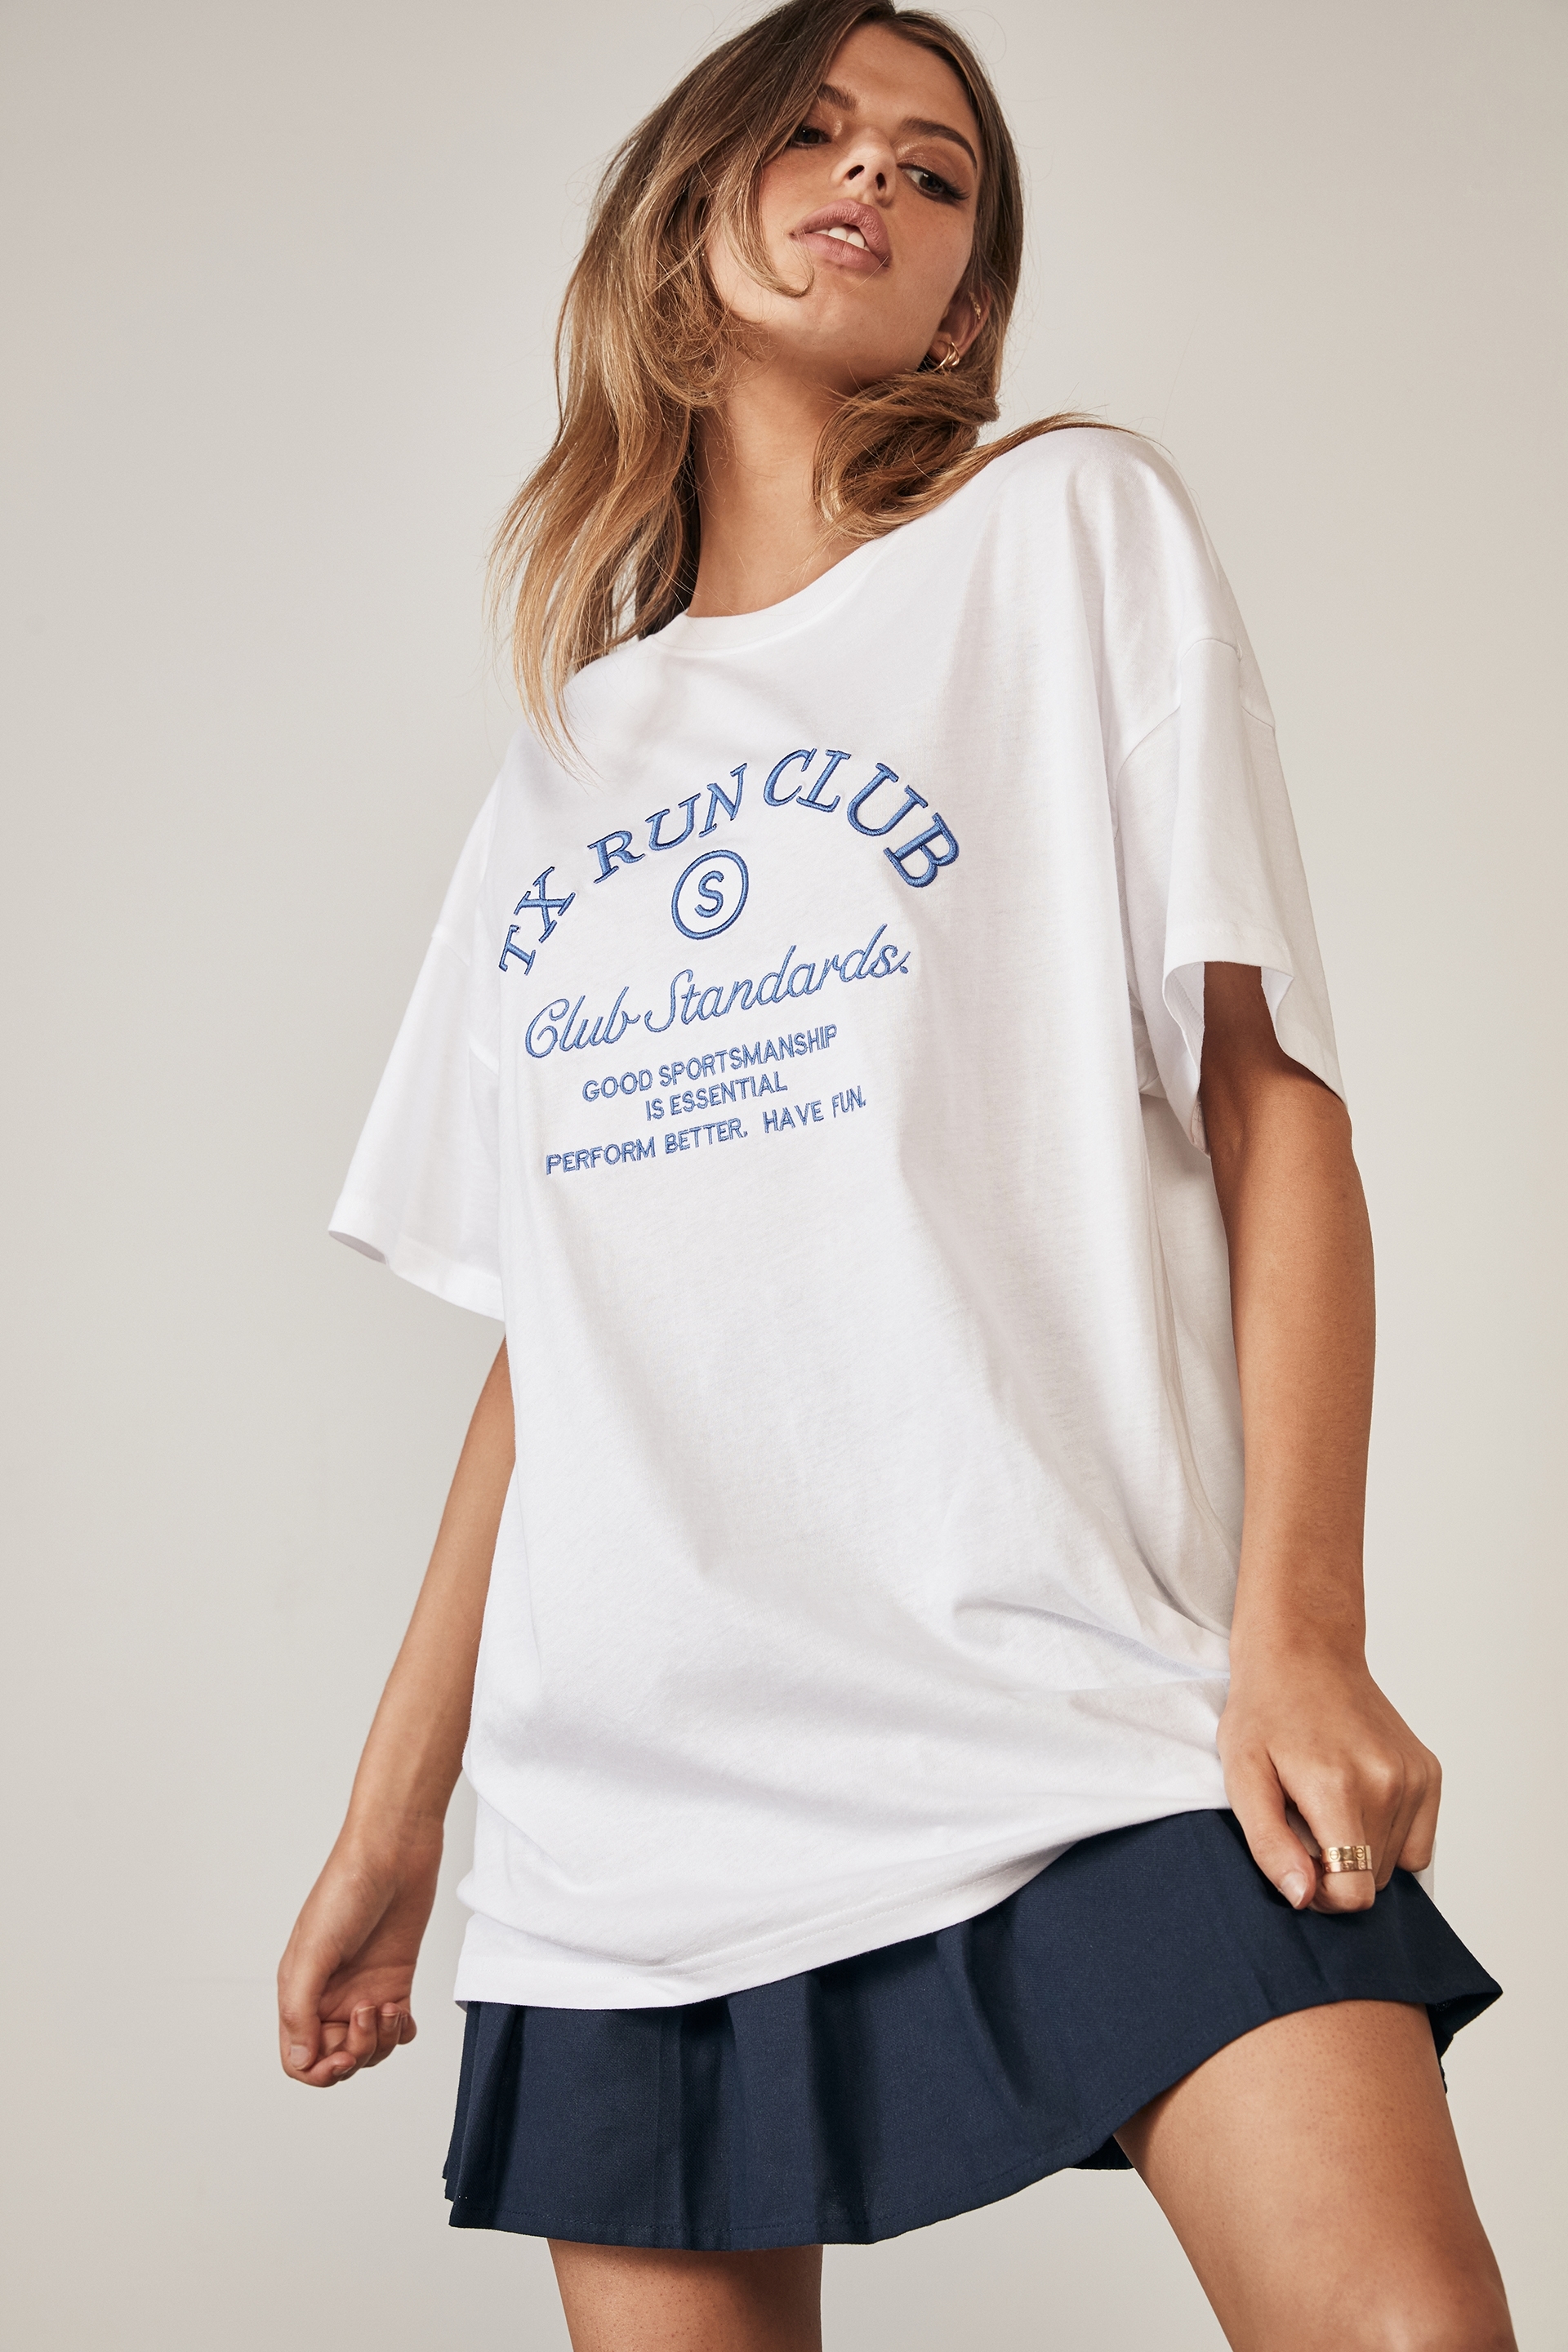 Factorie - Oversized Graphic T Shirt - White/tx run club